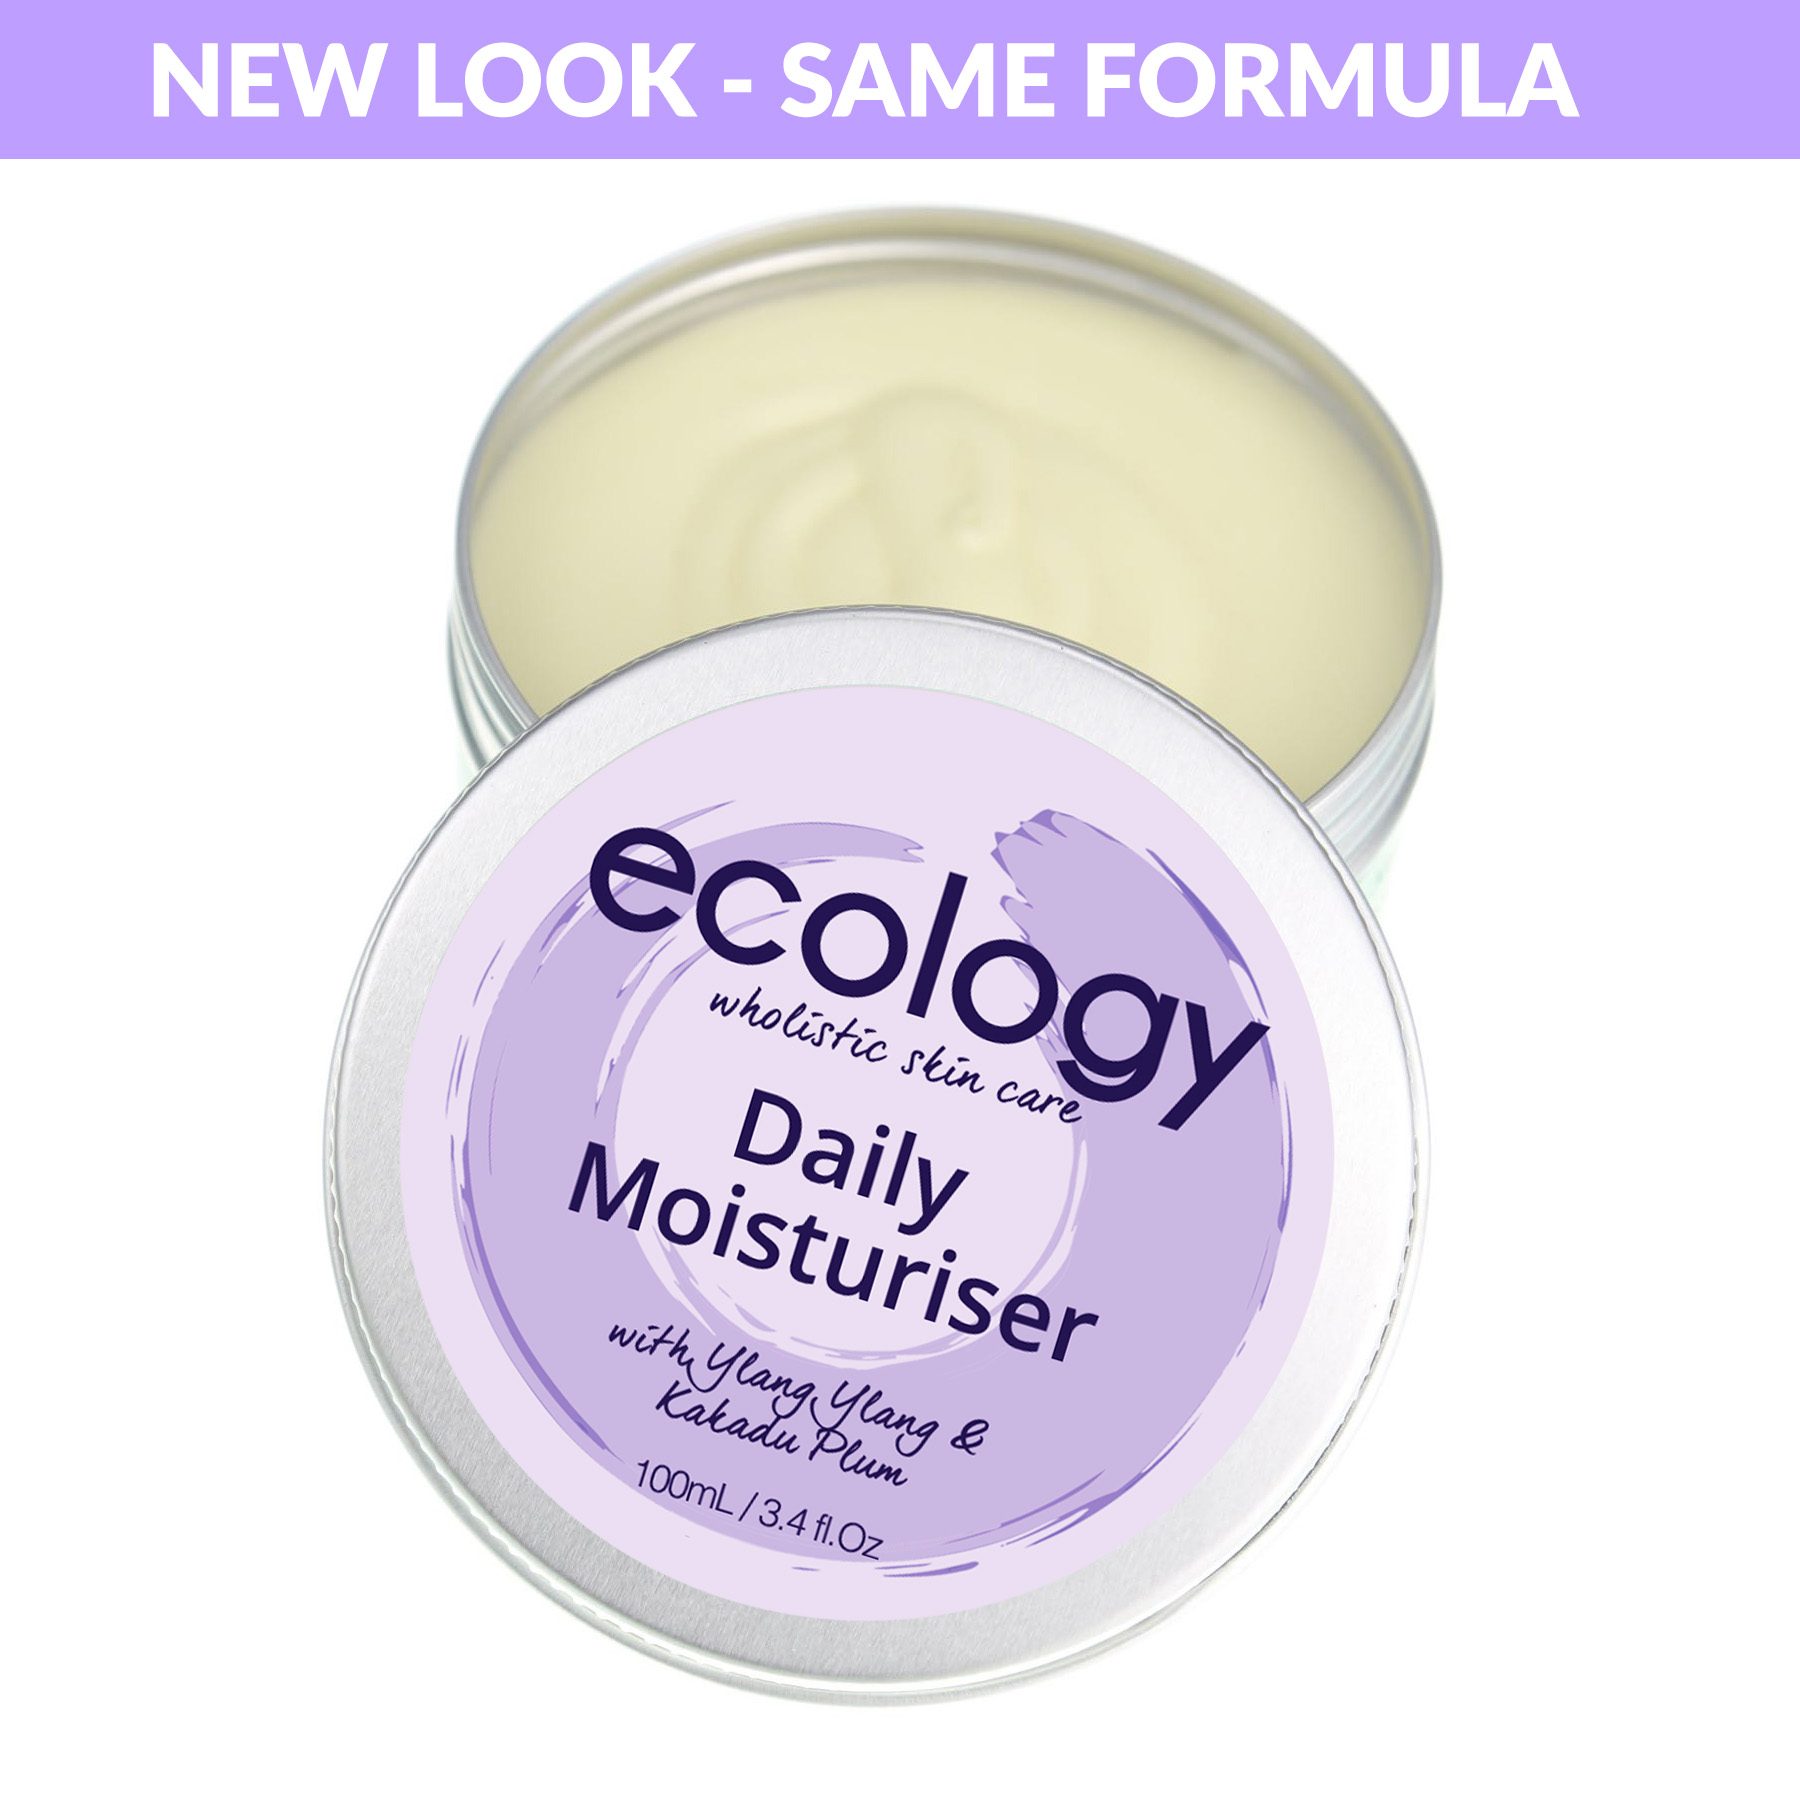 Ecology Moisturising Cream 70g (100mL)